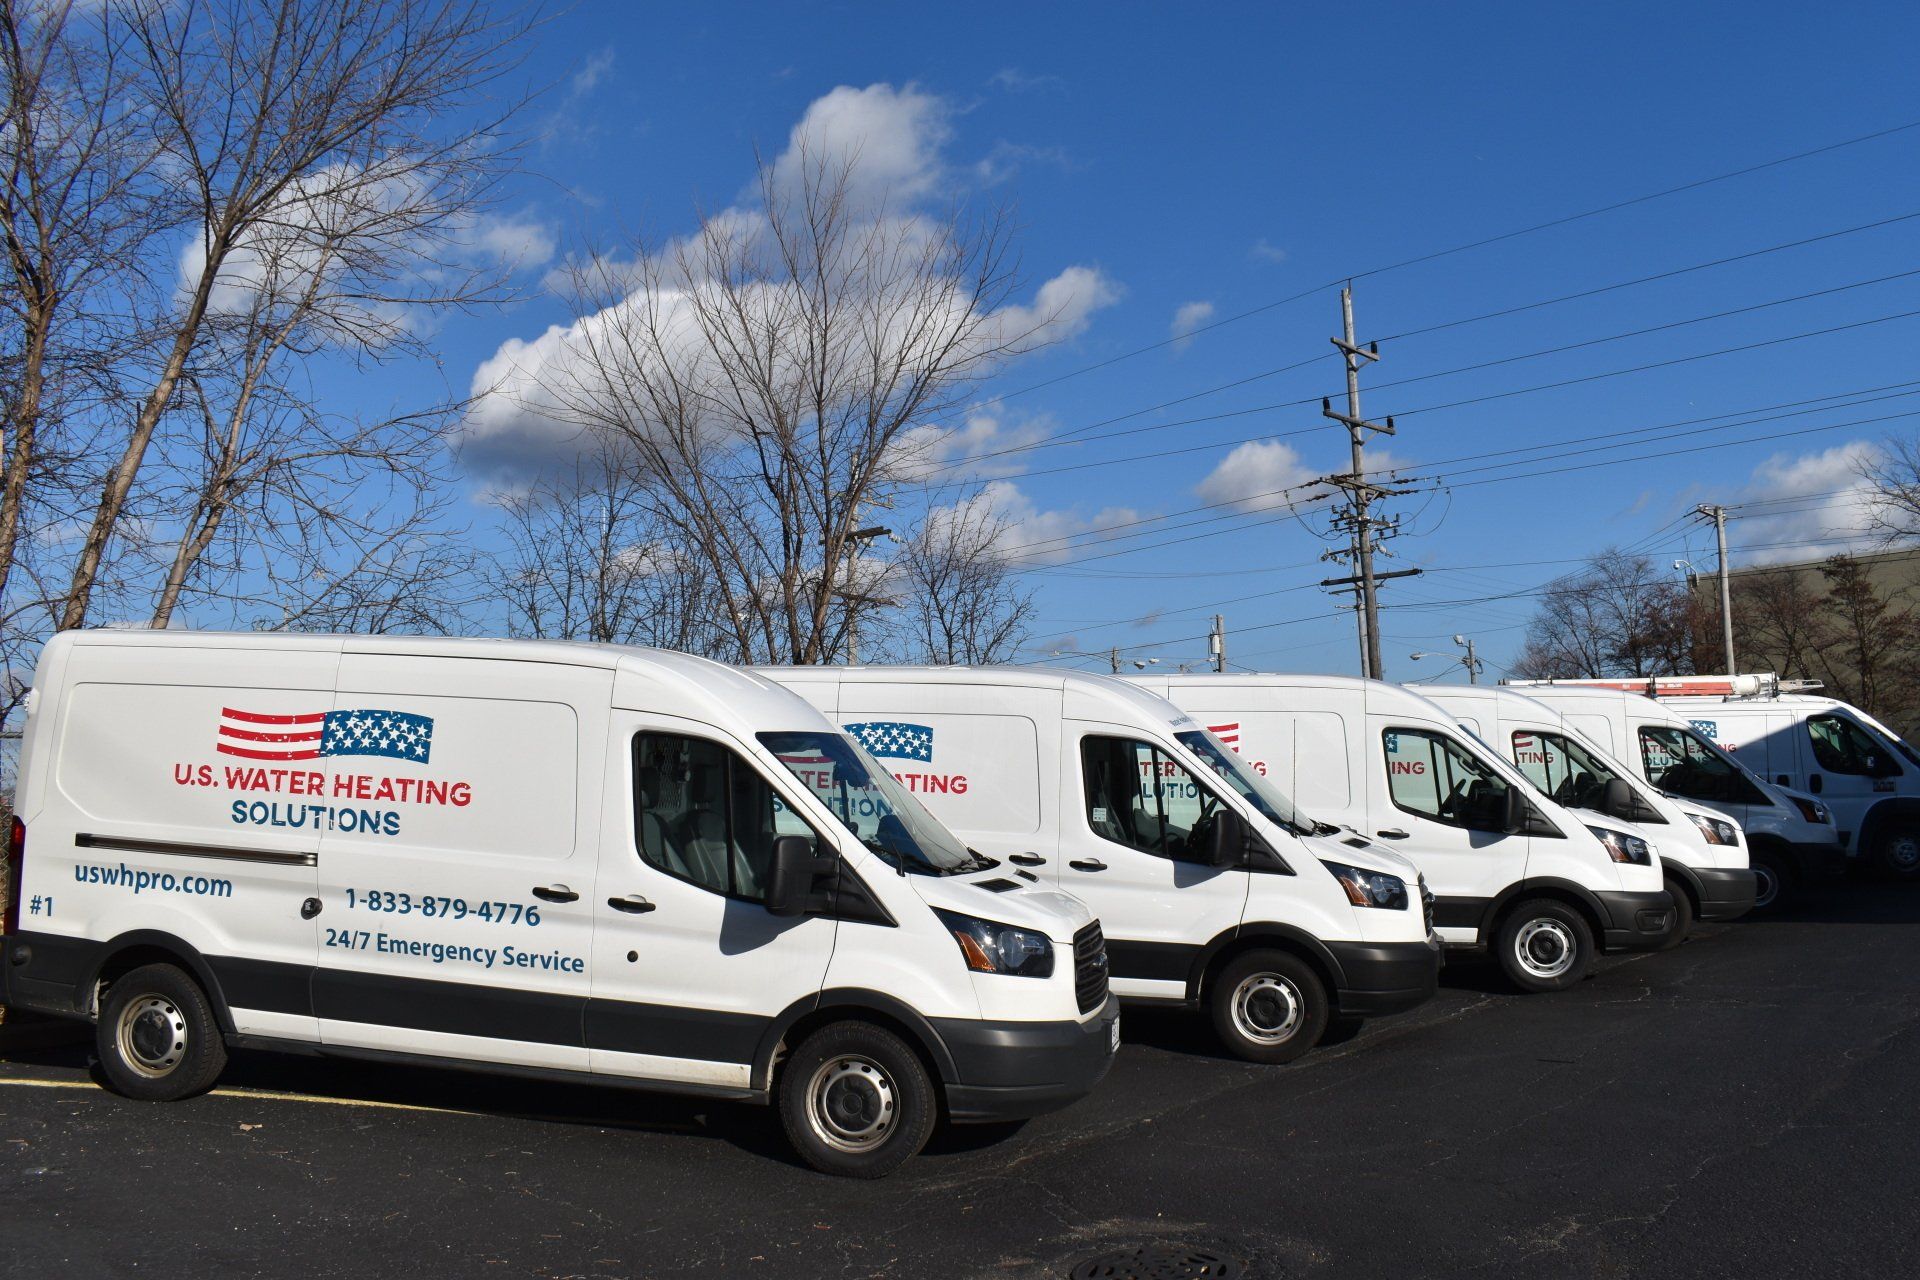 U.S. Water Heating Solutions company trucks